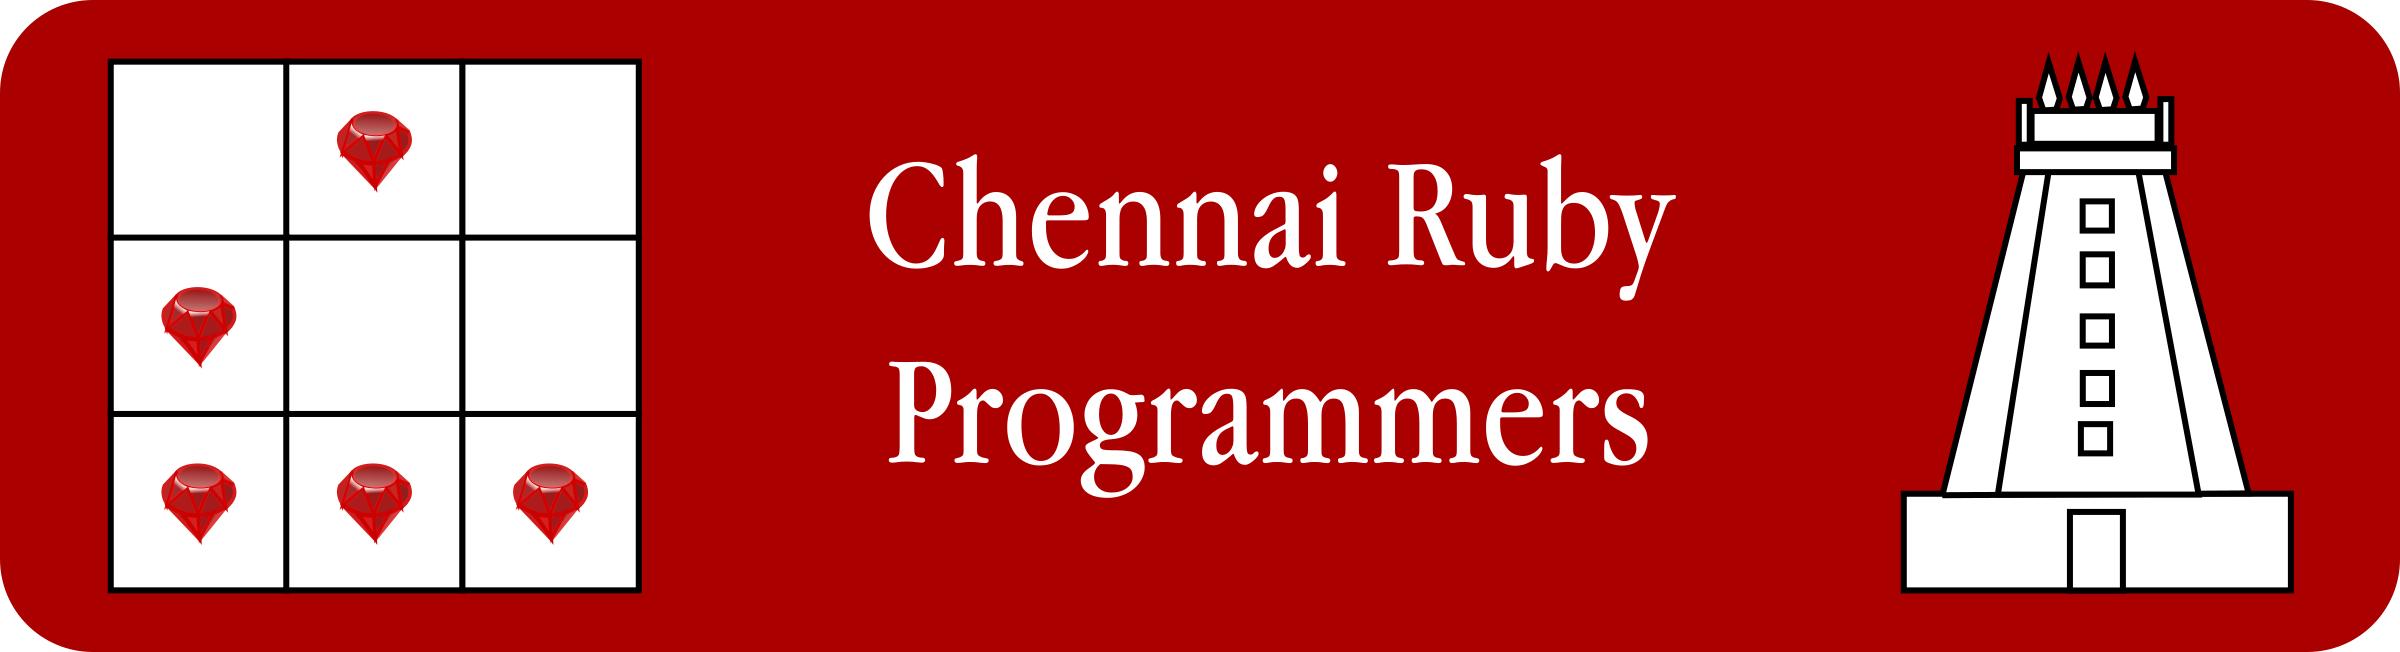 Chennai Ruby Programmers Logo png